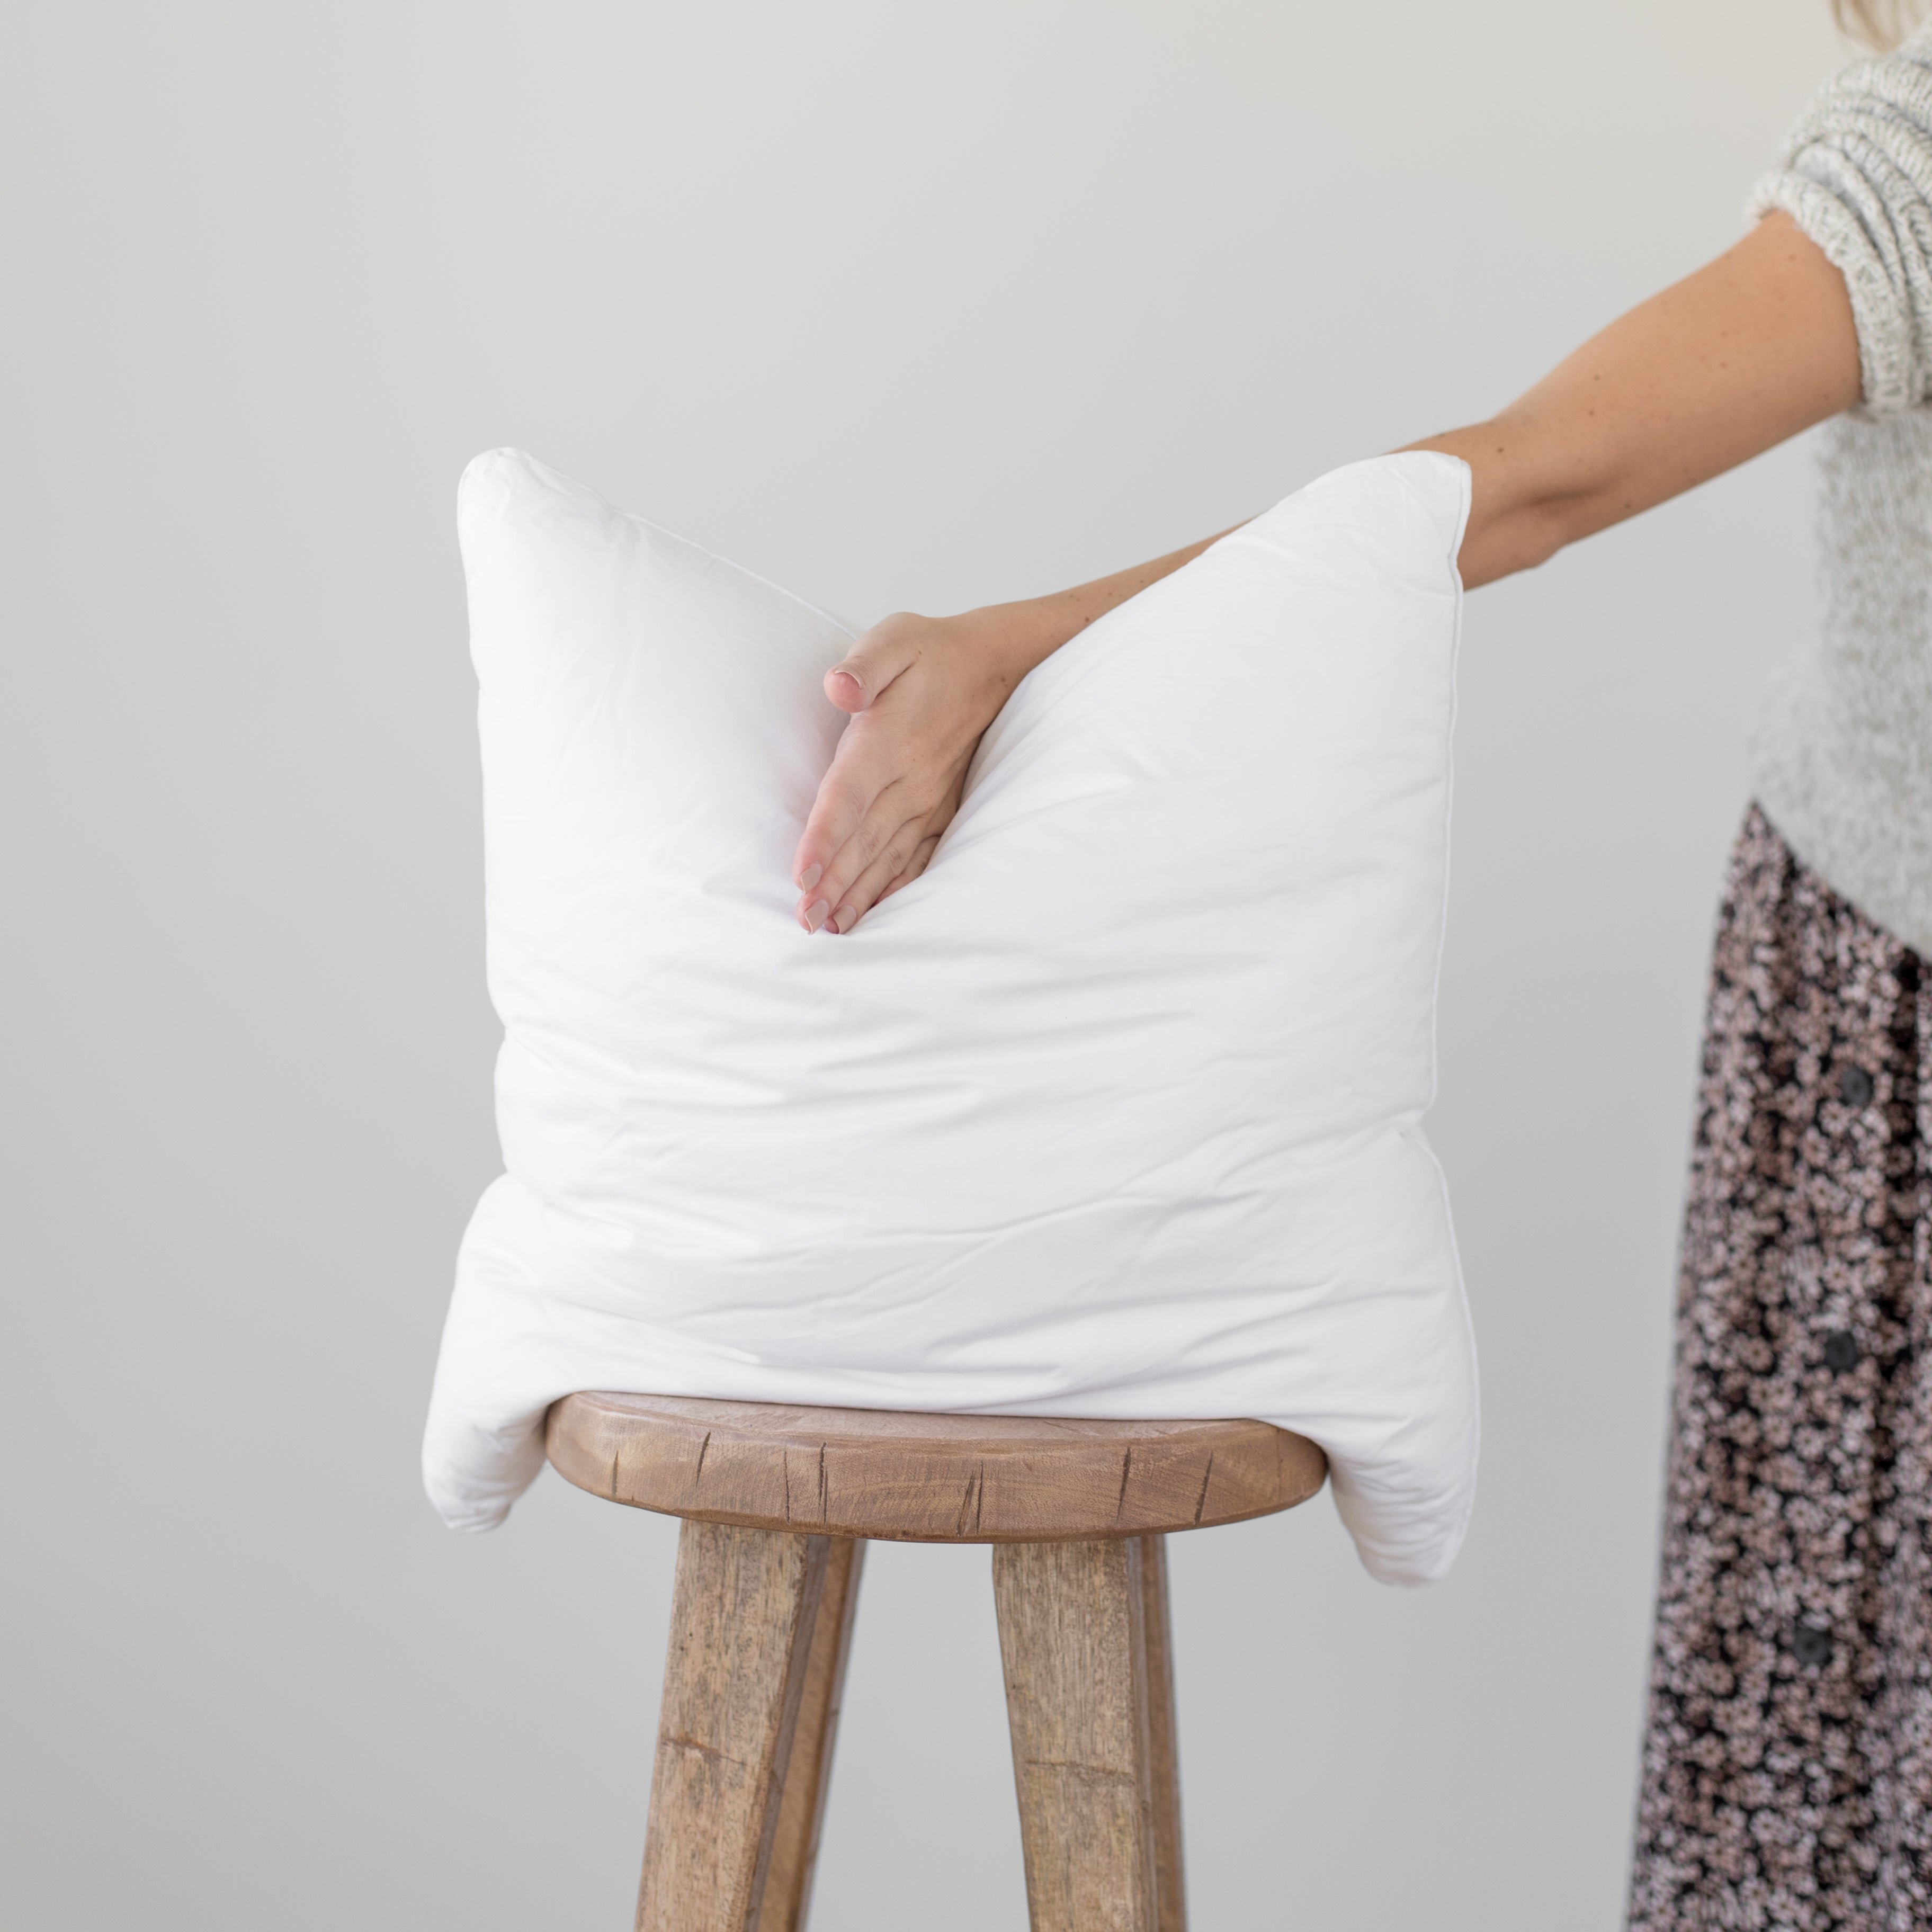 Alco Woven White Modern Throw Pillow with Down-Alternative Insert